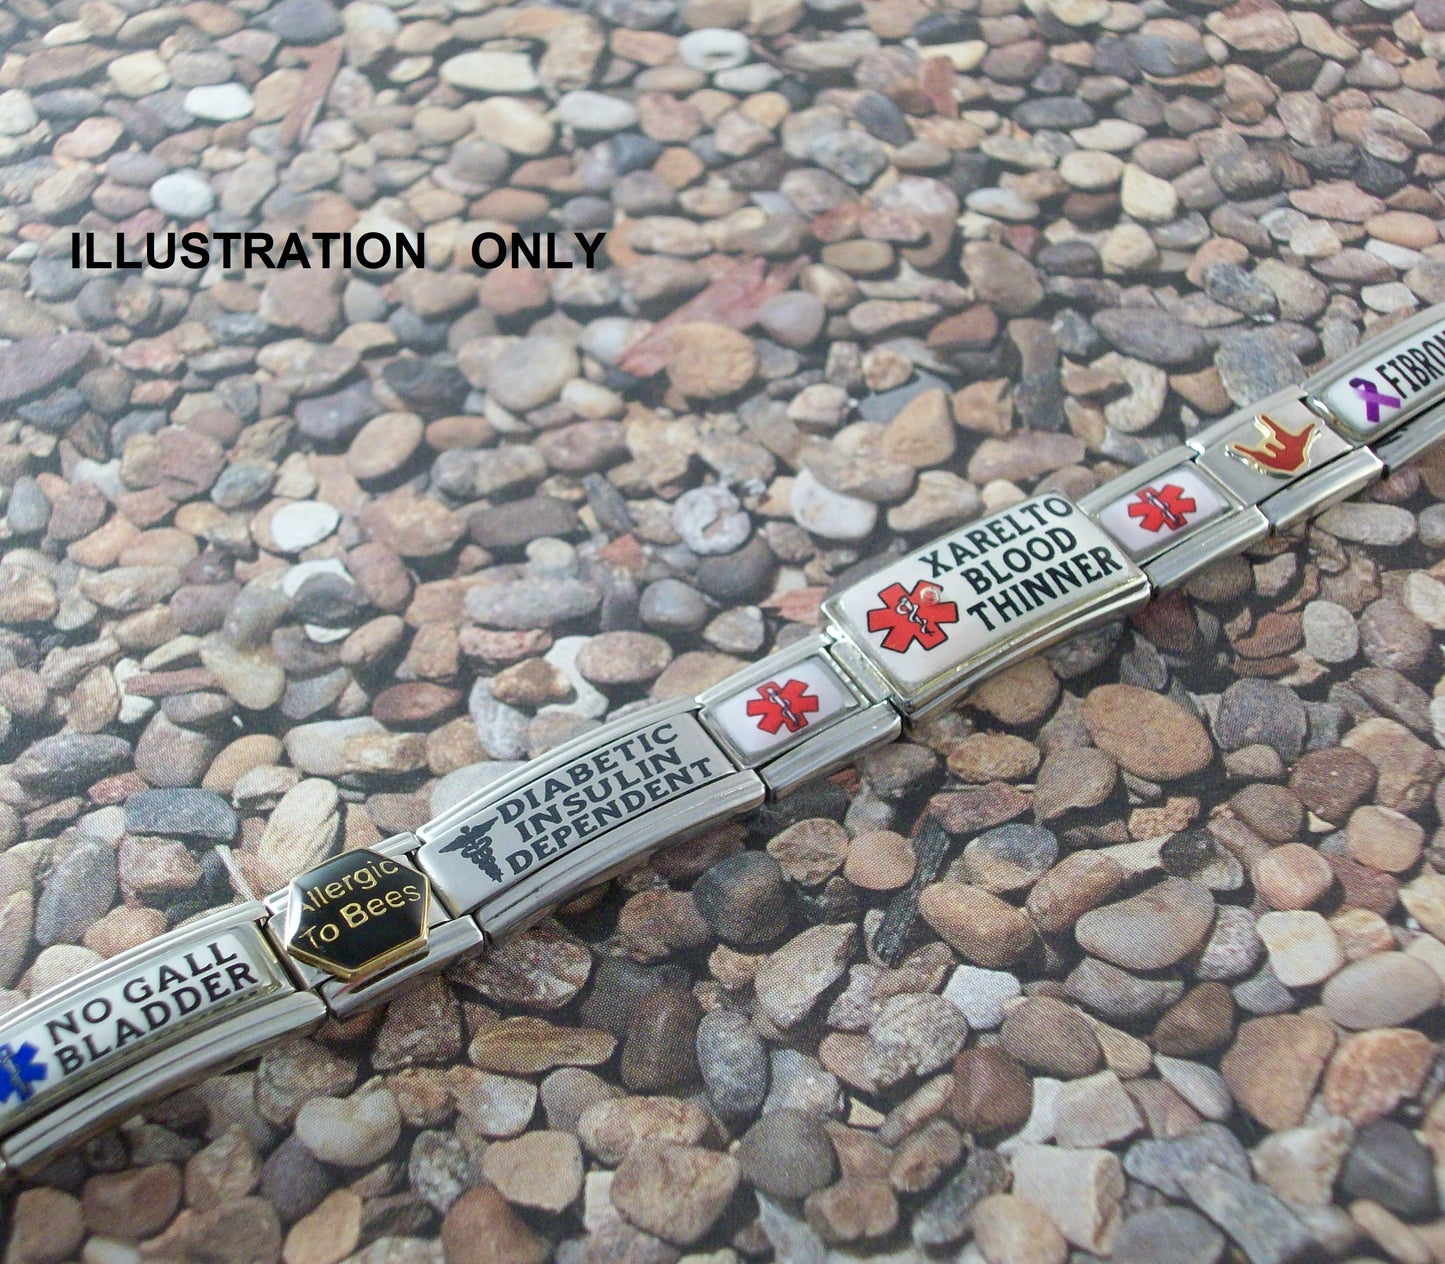 Gadow Jewelry Defibrillator Medical Alert Bracelet Italian Charm Style